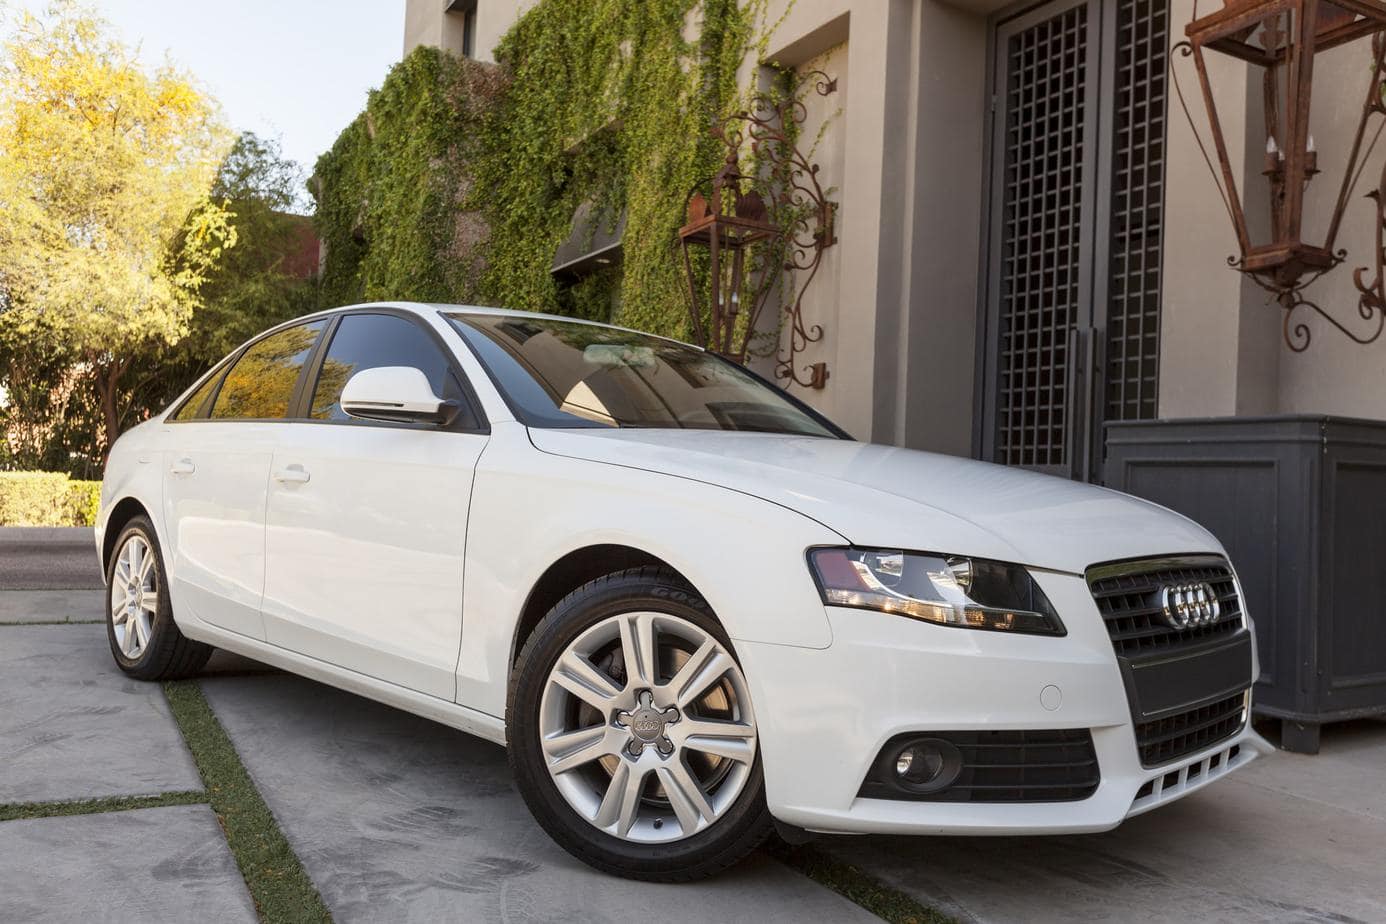 5 Best Used Luxury Cars Under 10k